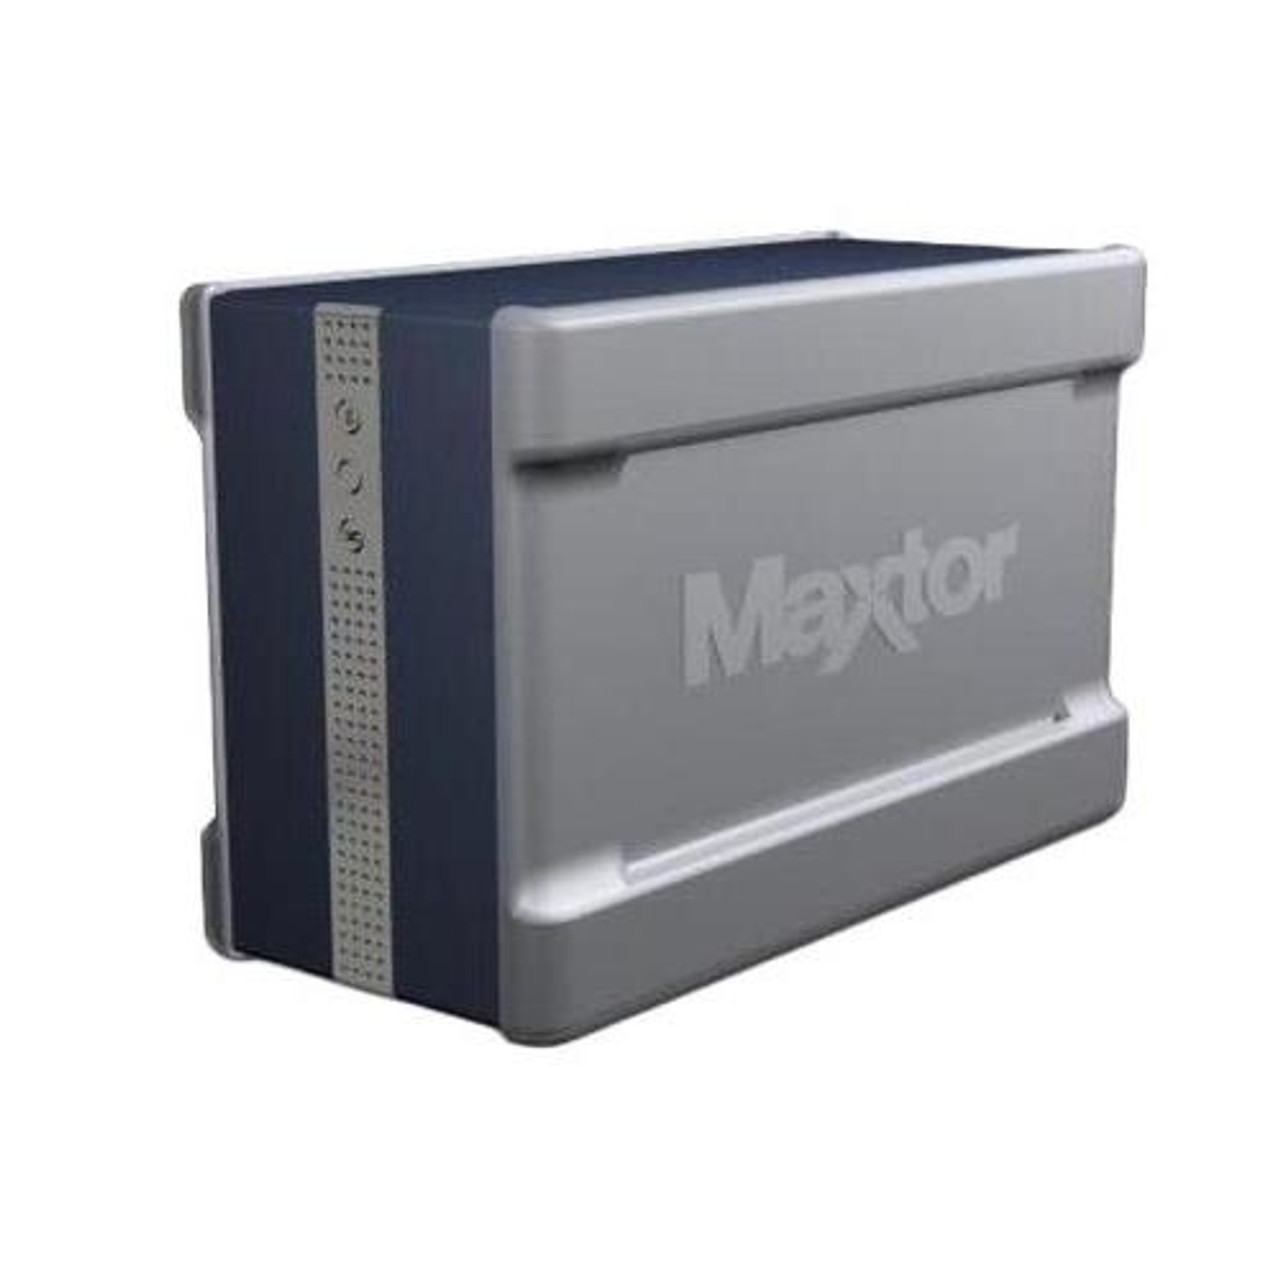 H01P200 Maxtor Shared Storage